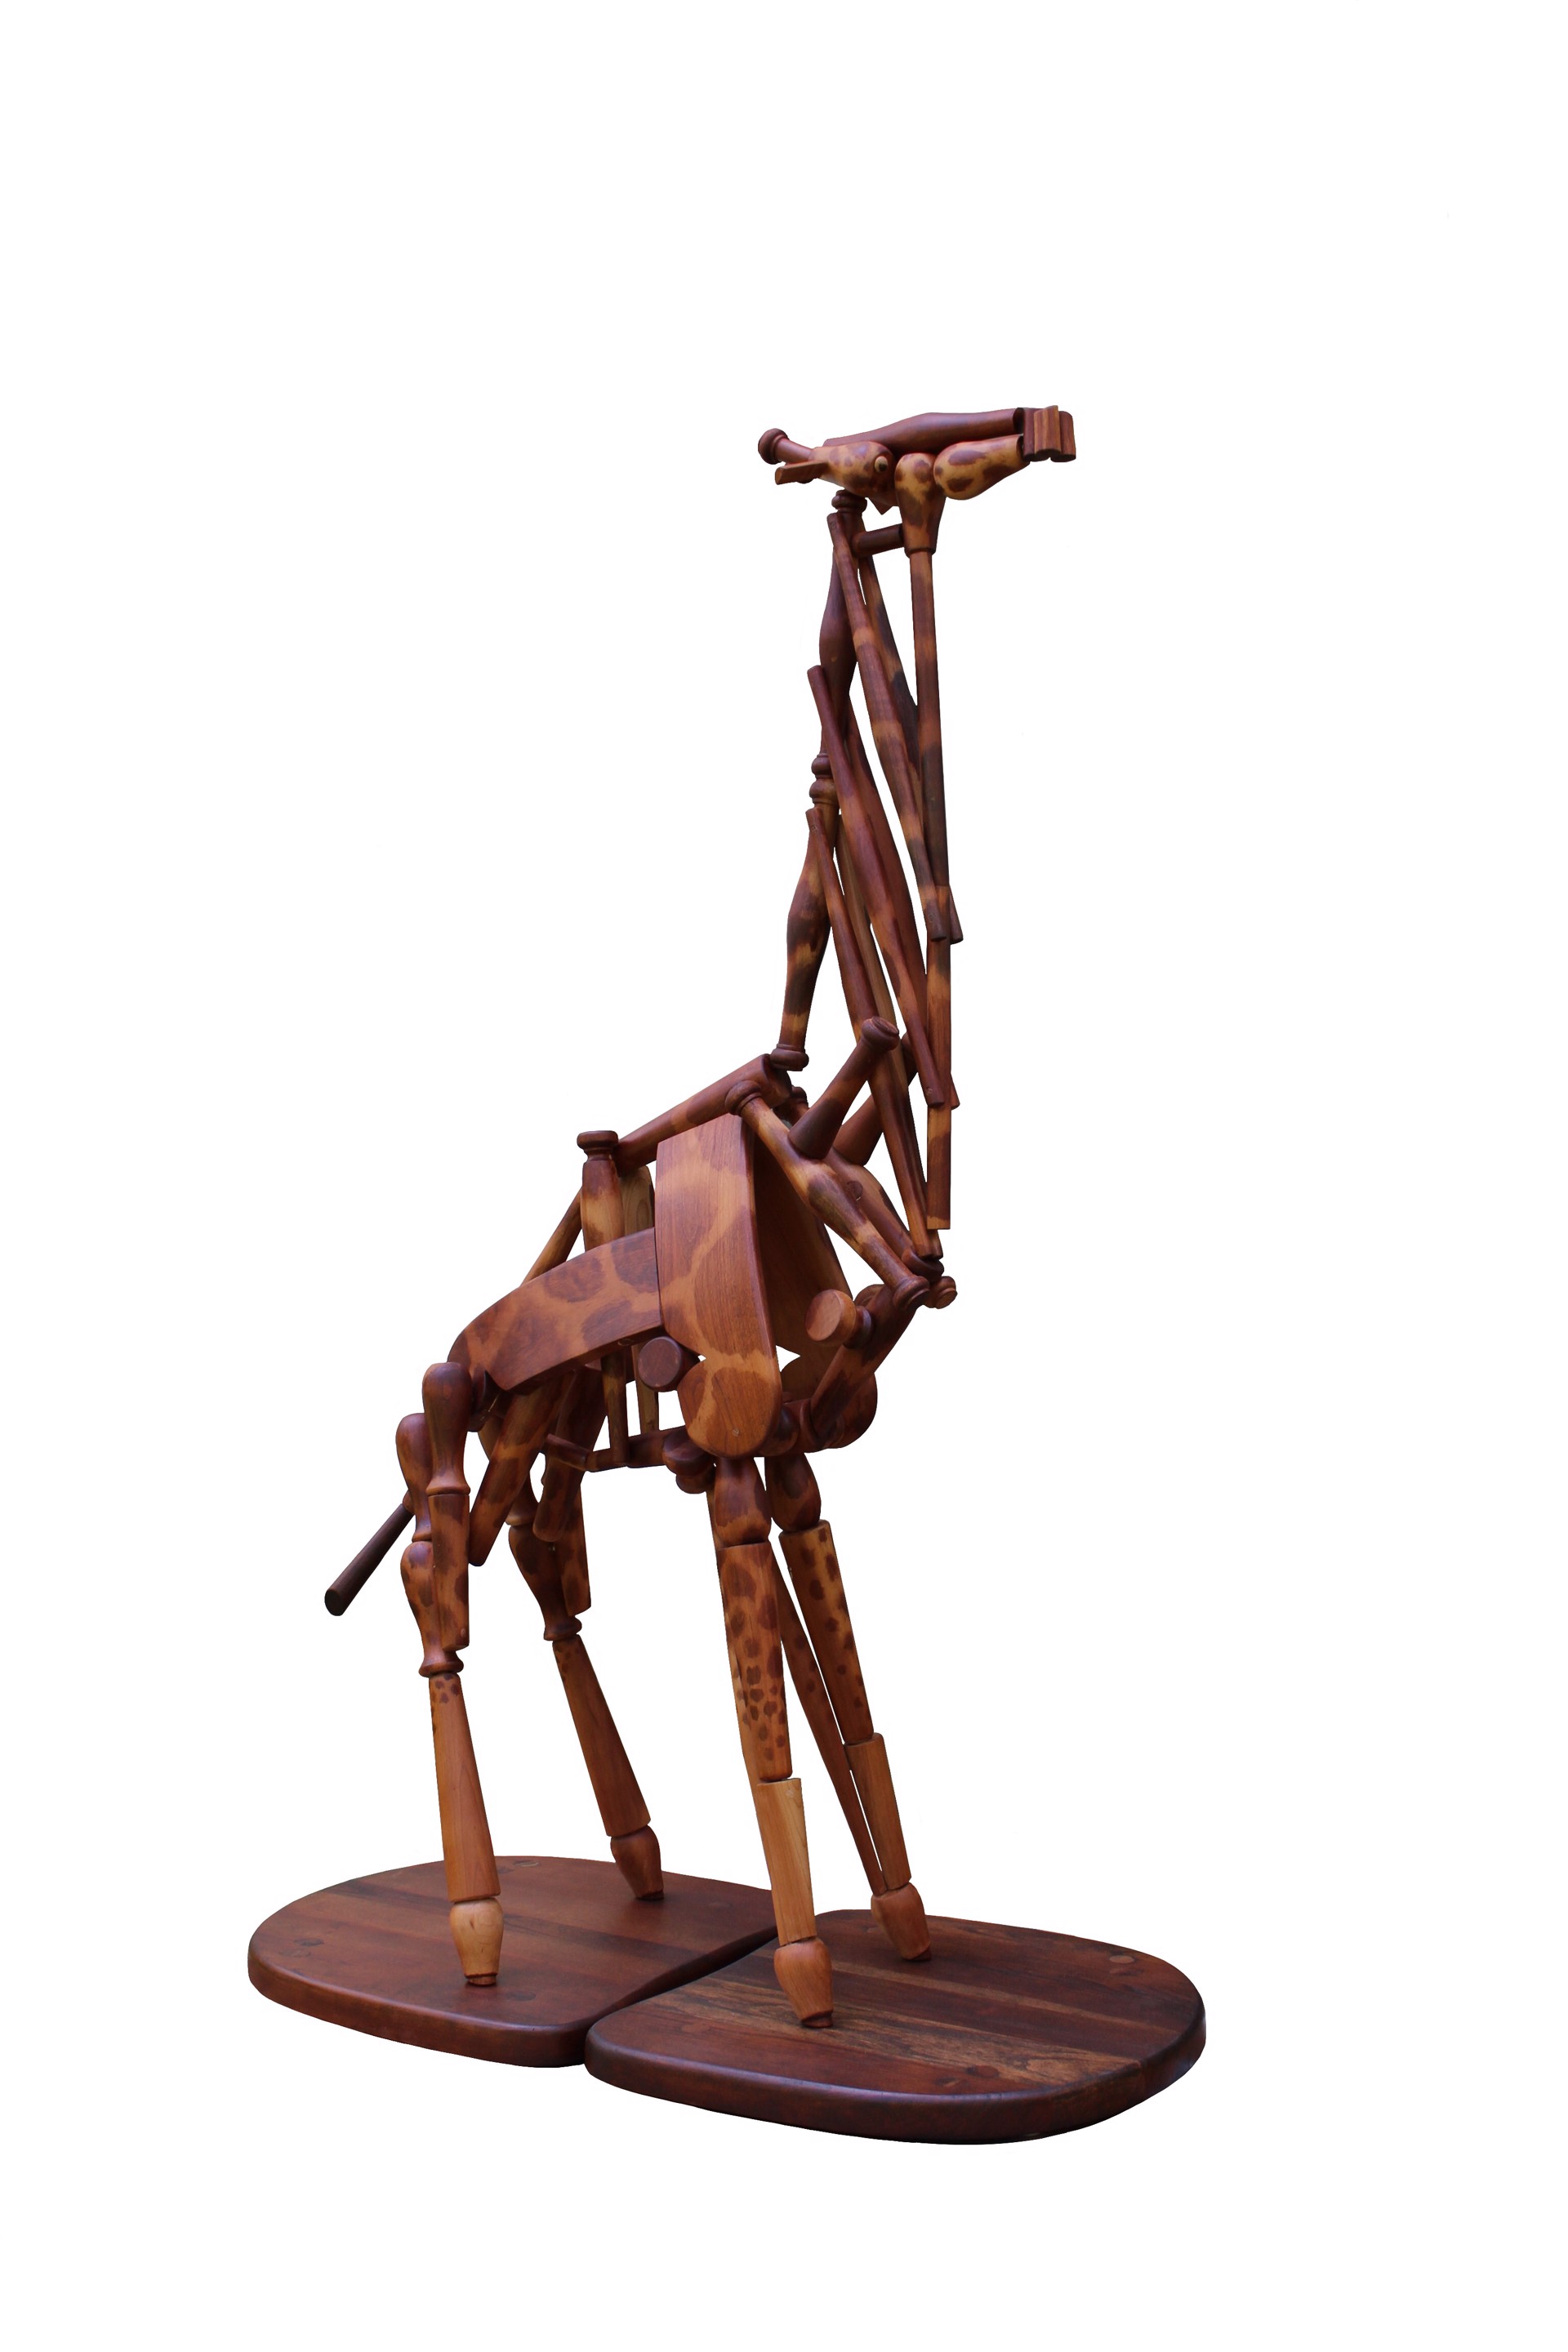 Reticulated Giraffe by José Pablo Barreda